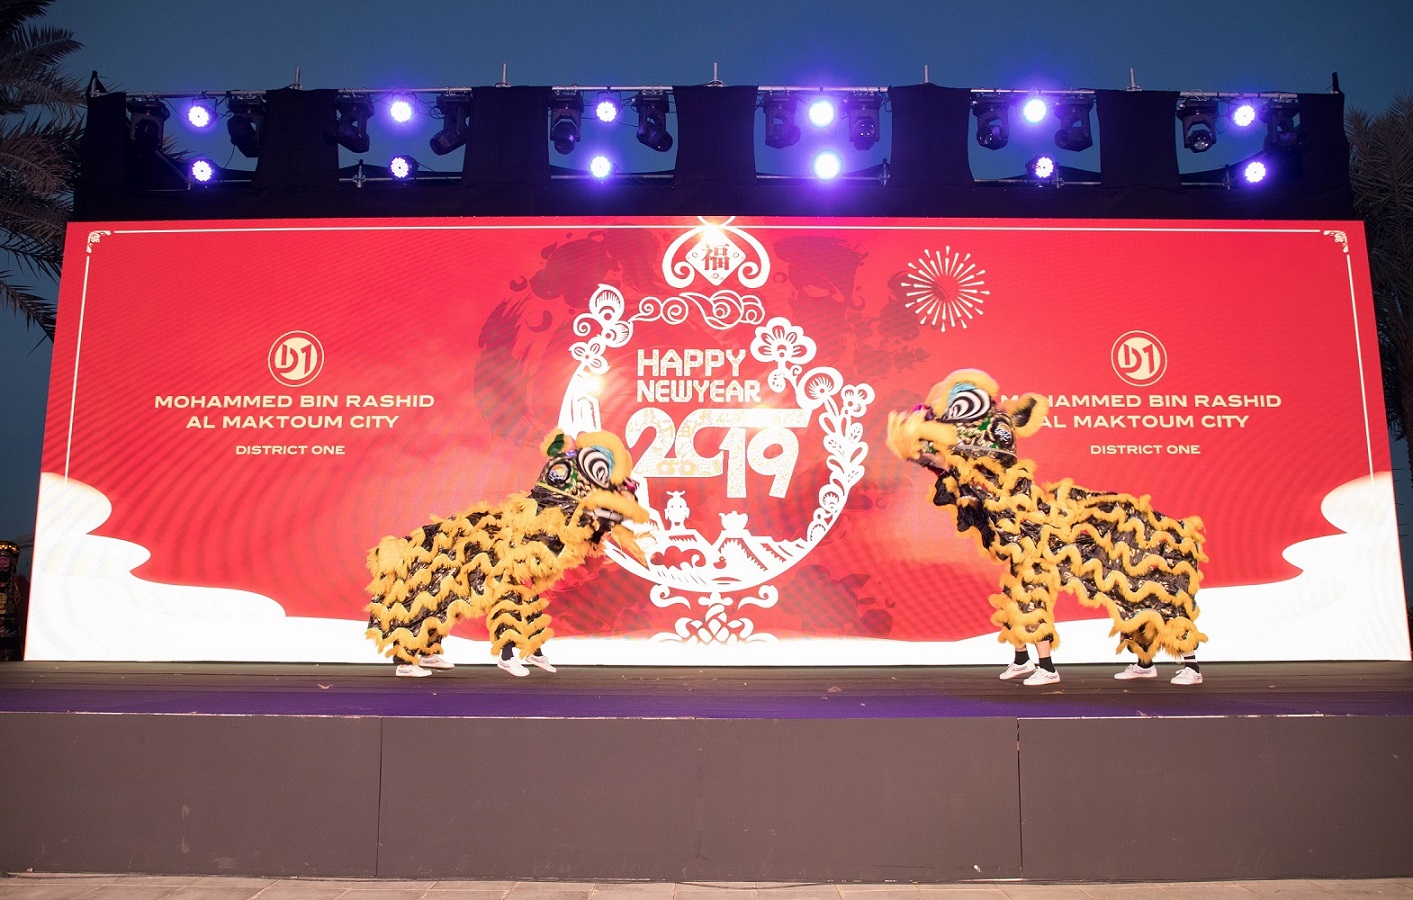 Mohammed Bin Rashid Al Maktoum City, District One отпраздновал Китайский Новый год